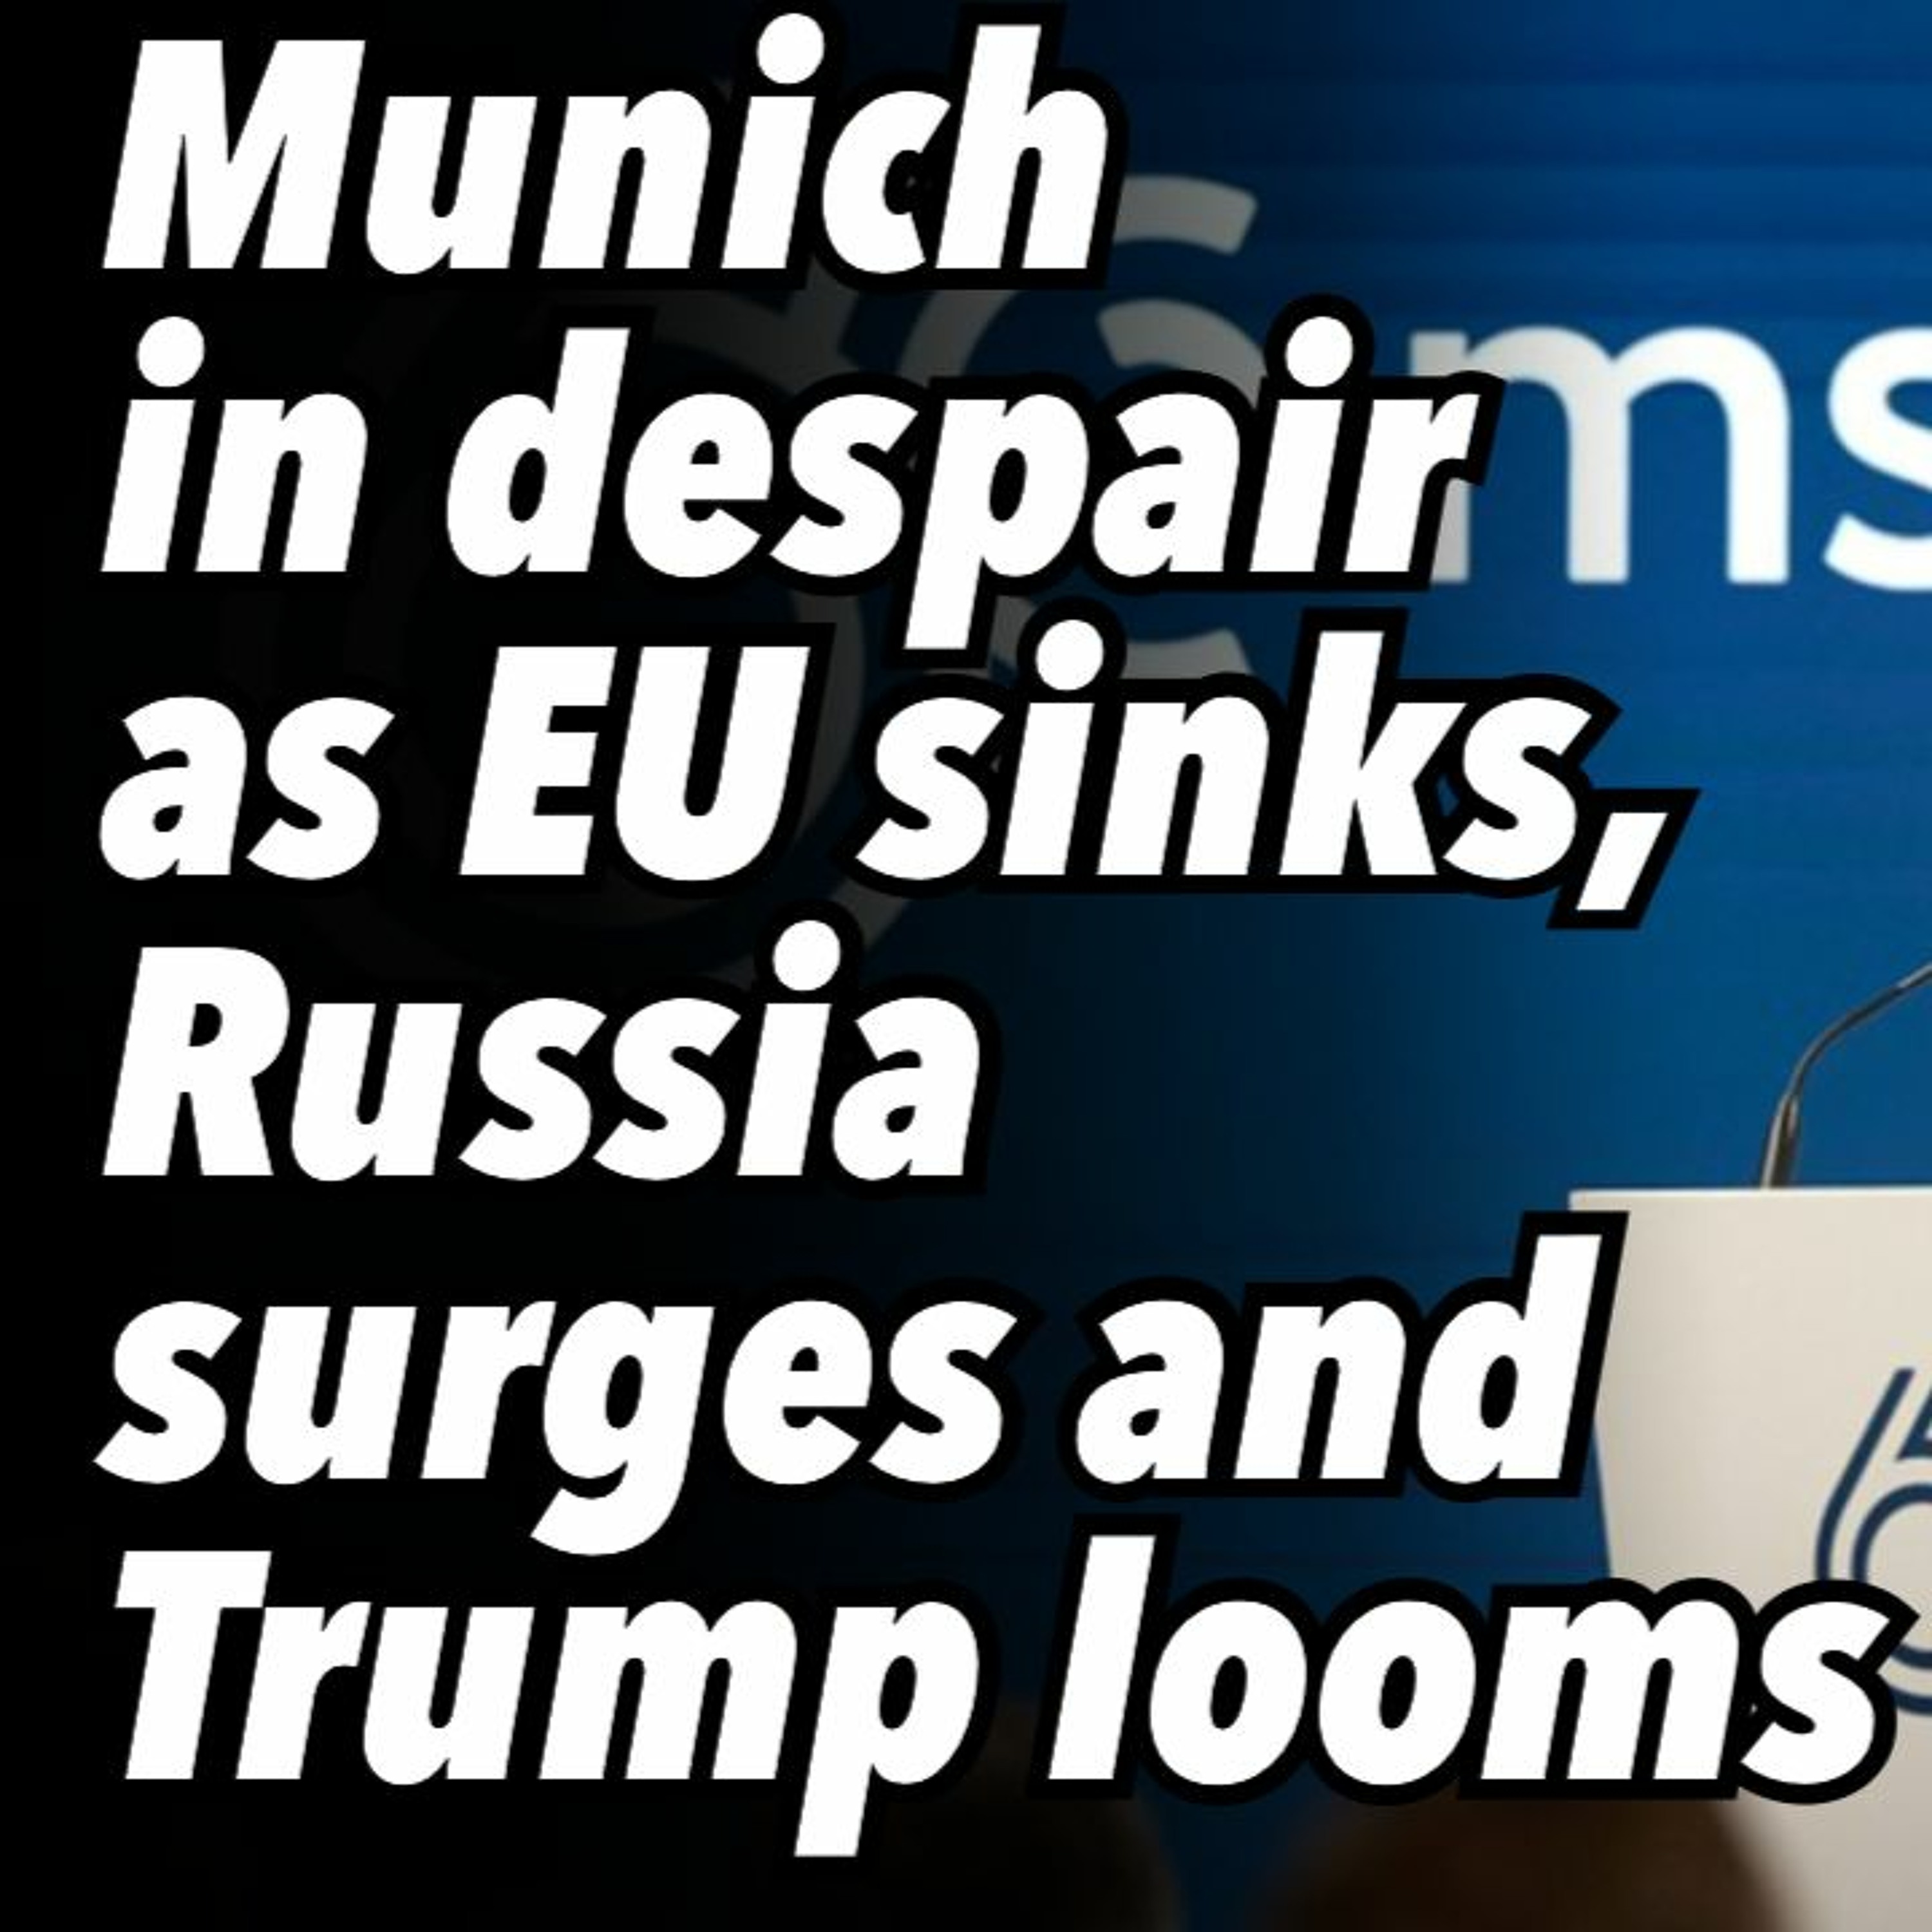 Munich in despair as EU sinks, Russia surges and Trump looms